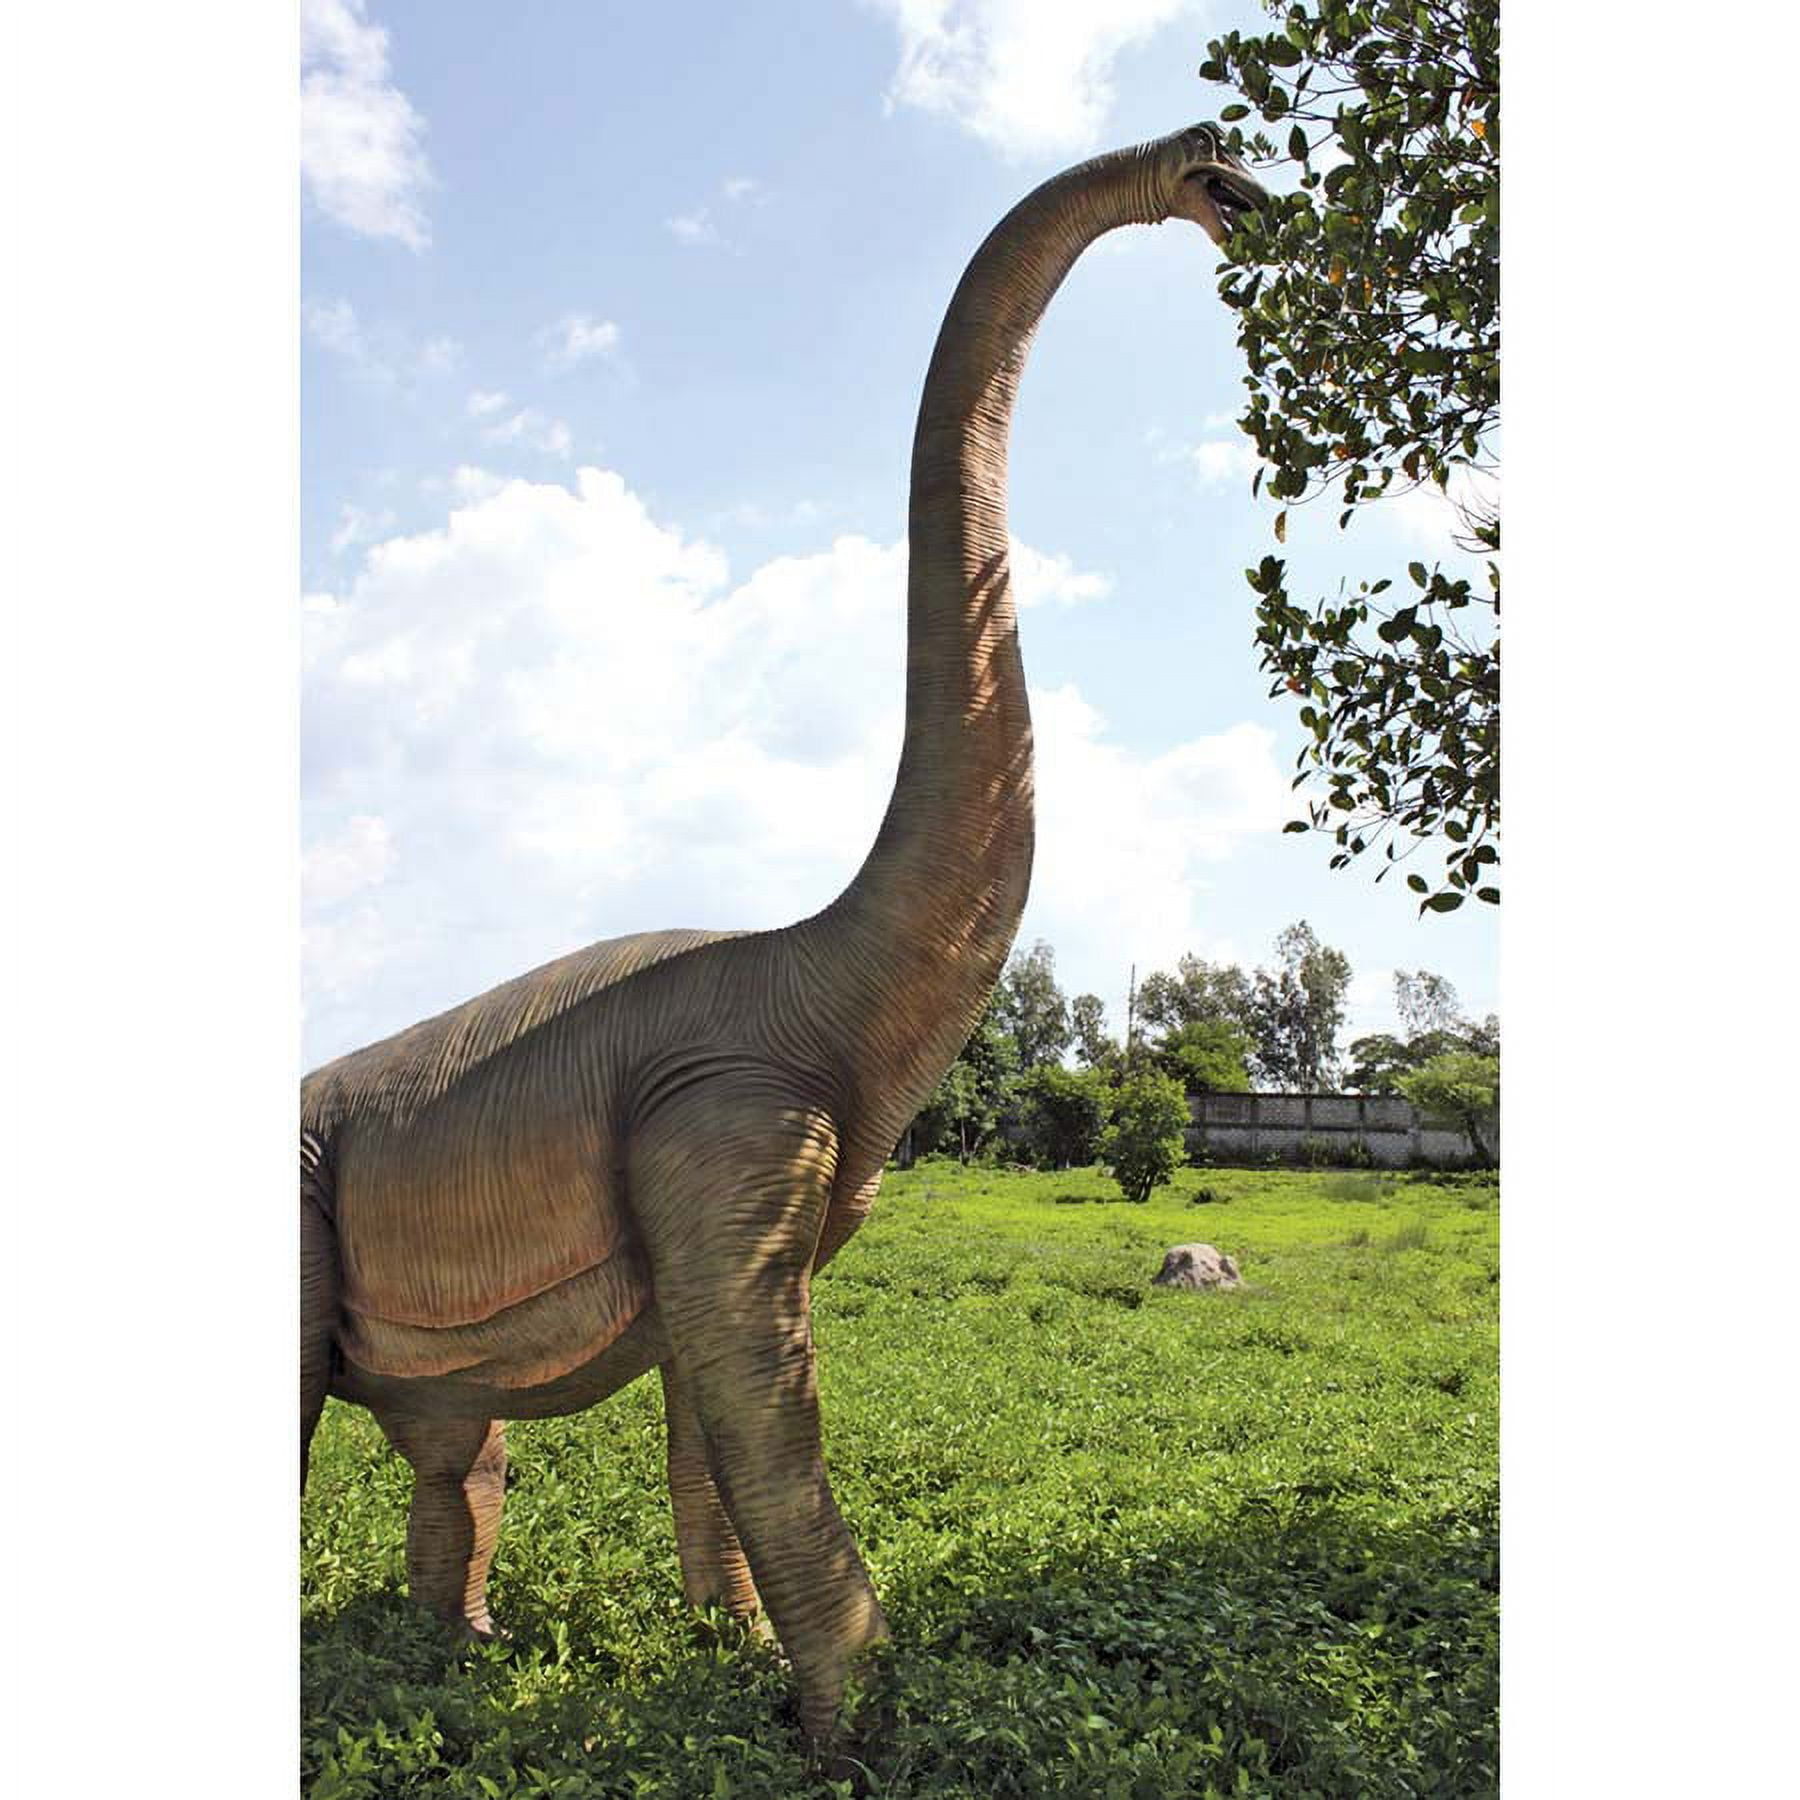 Jurassic-Sized Deinonychus Dinosaur Statue - NE120002 - Design Toscano